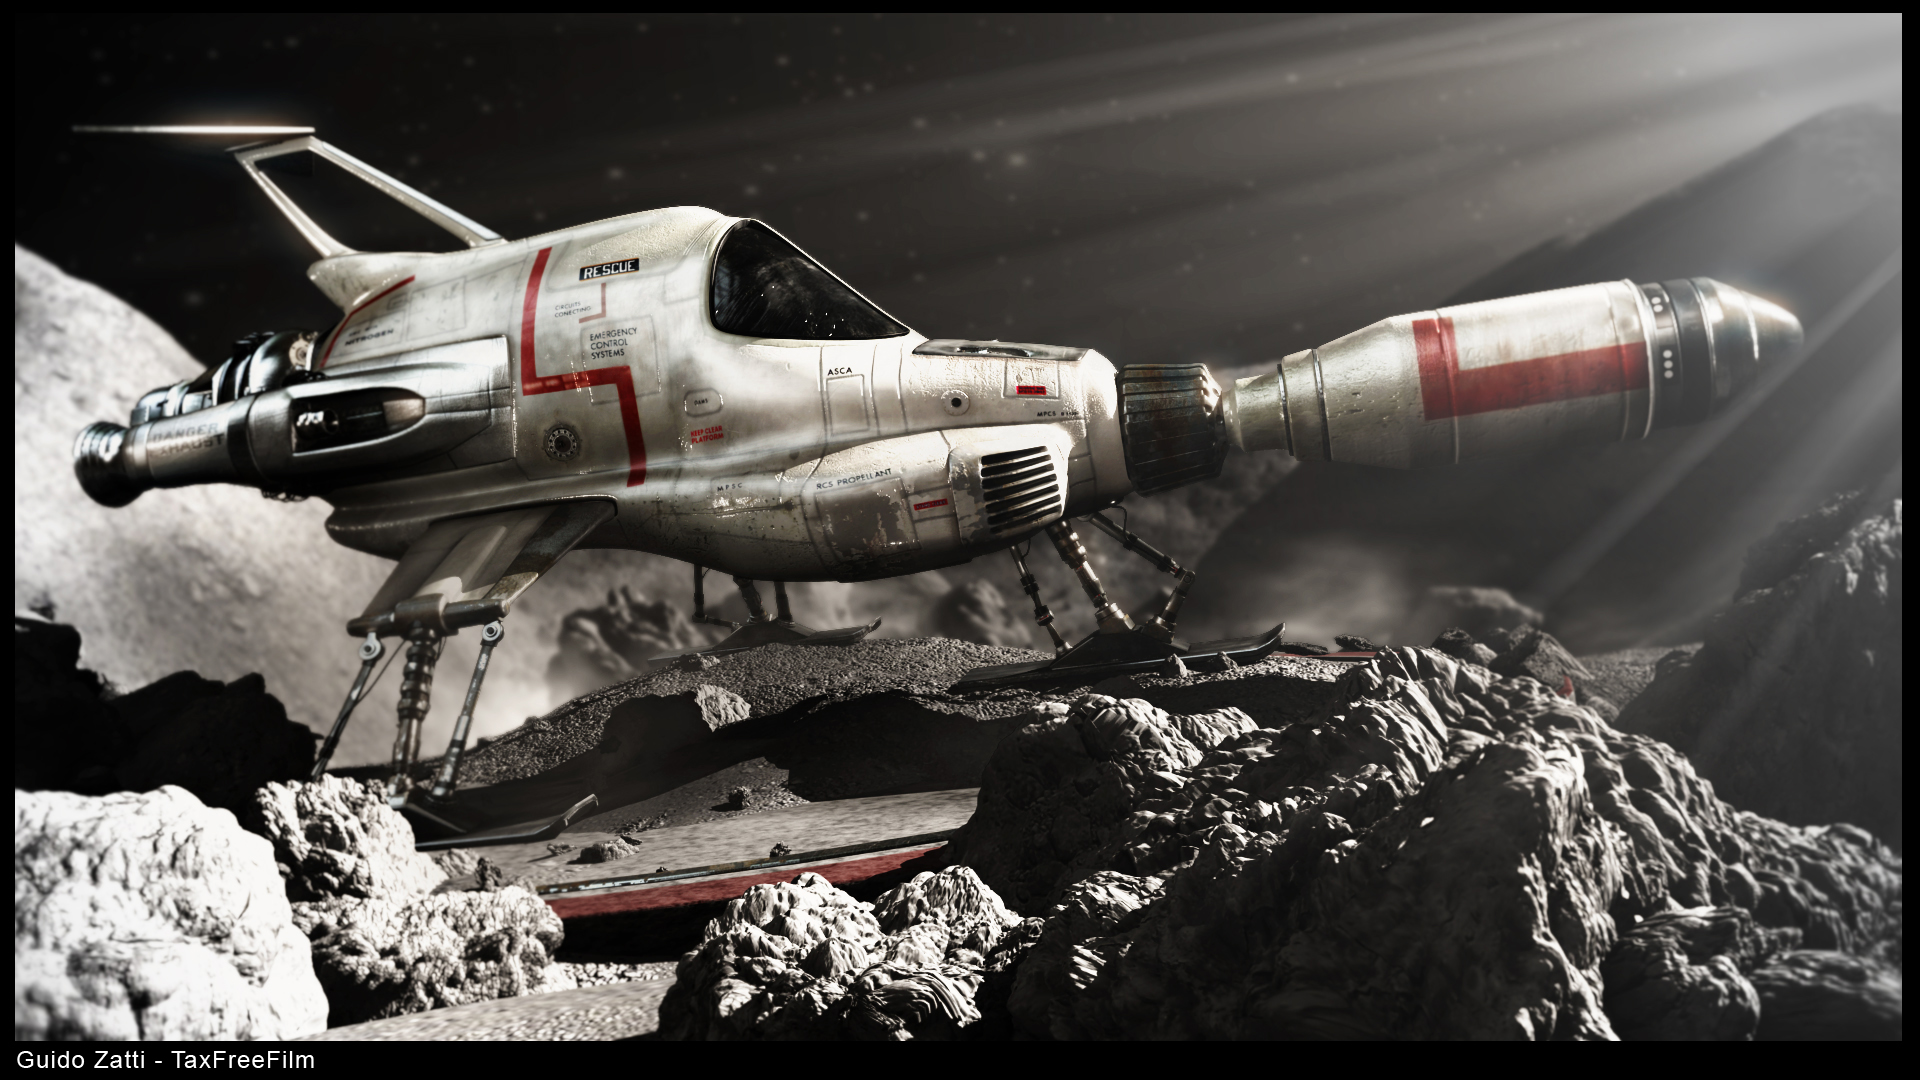 spaceships, interceptor, vehicles - desktop wallpaper